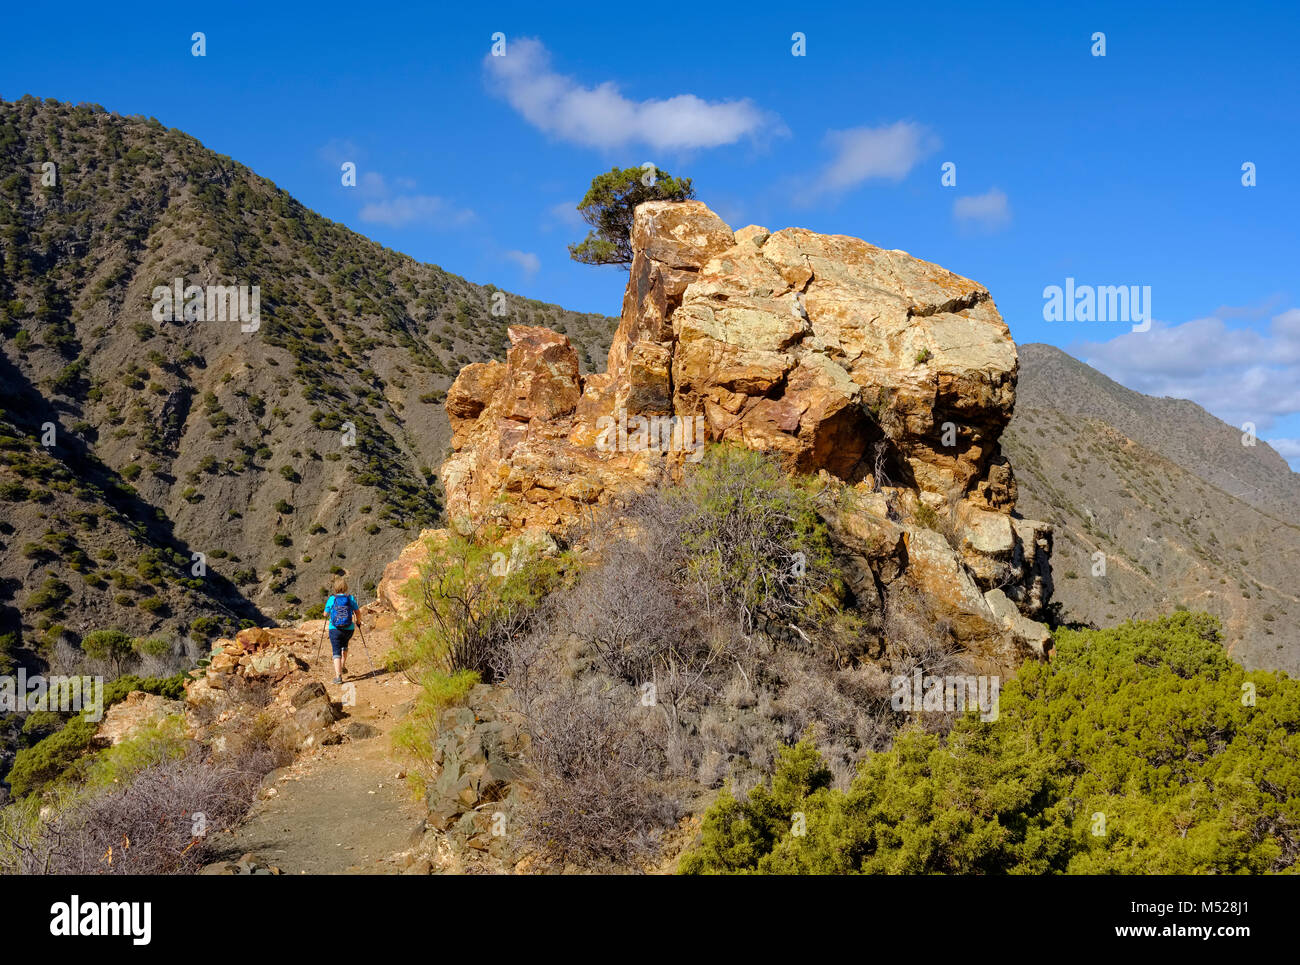 Rock formation,woman hiking on trail,Tamargada near Vallehermoso,La Gomera,Canary Islands,Spain Stock Photo